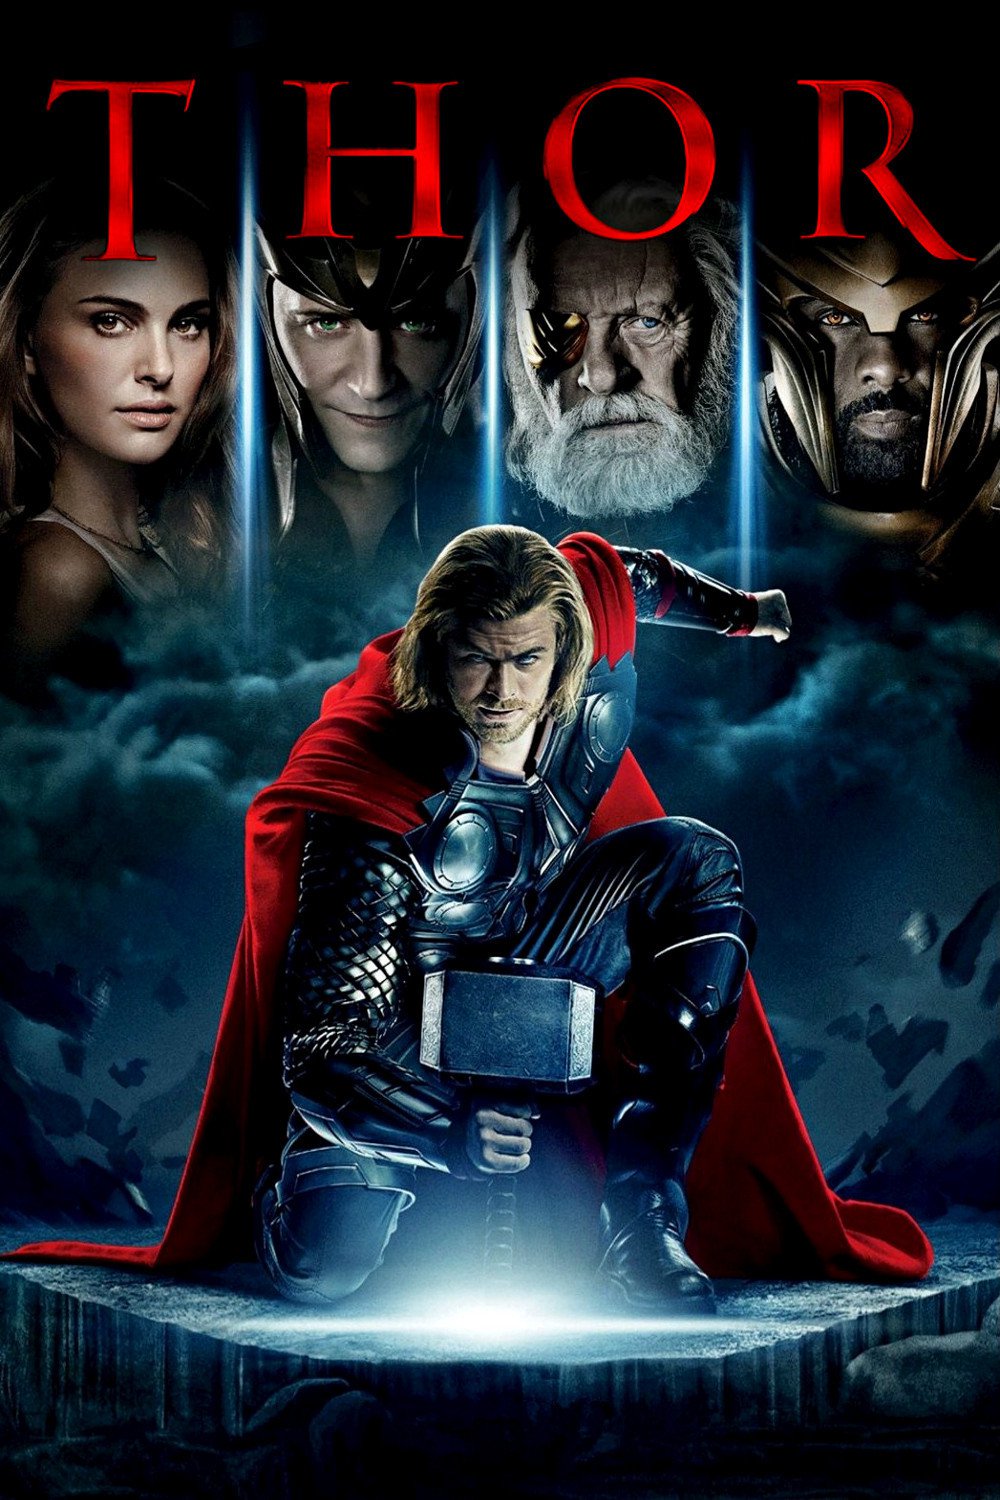 Thor Full Movie Download Free in 720p BRRip Dual Audio